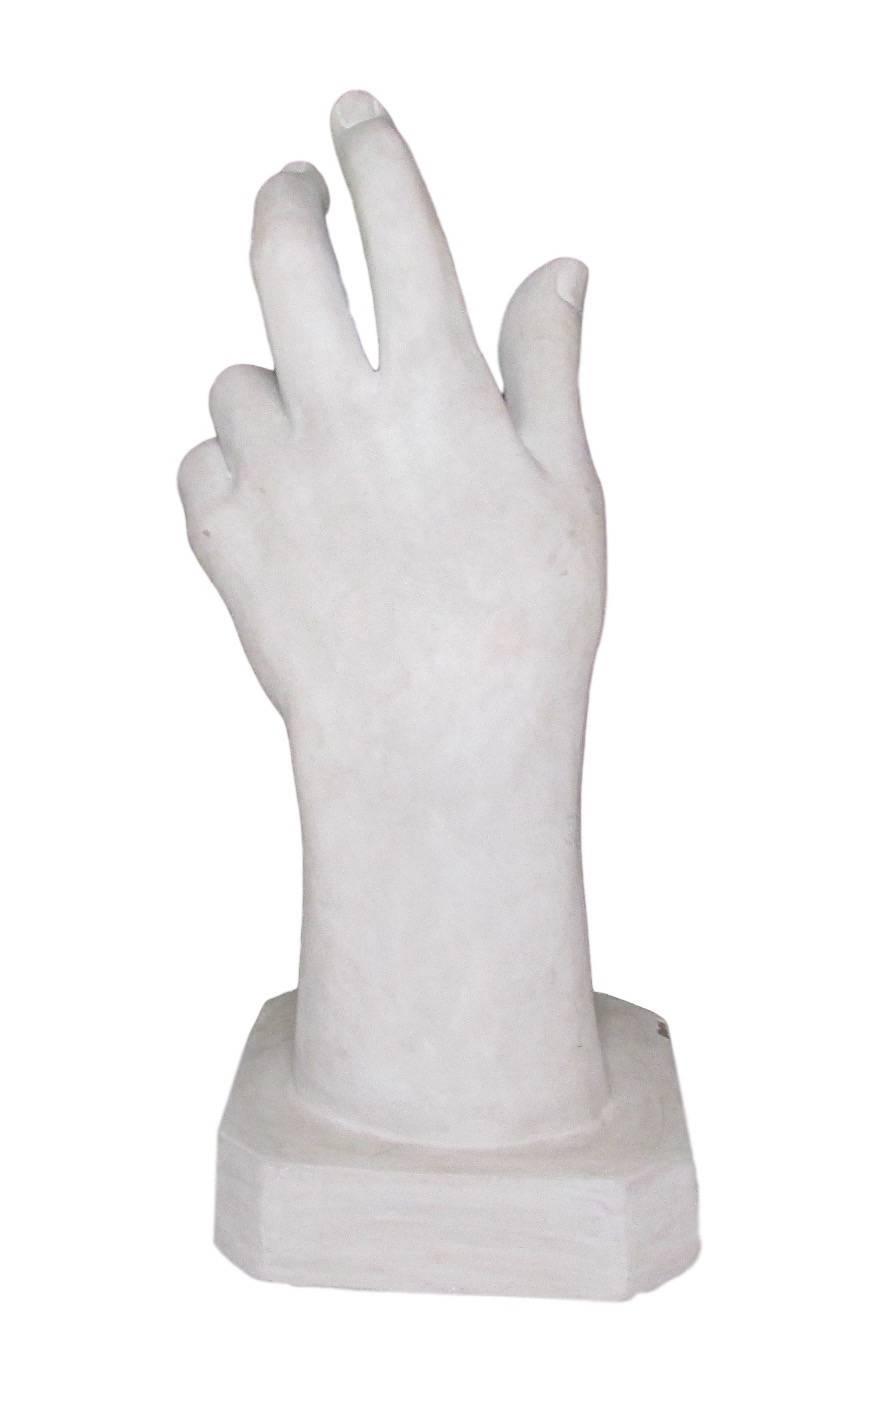 Oversized Fiberglass Hand Sculpture For Sale at 1stdibs